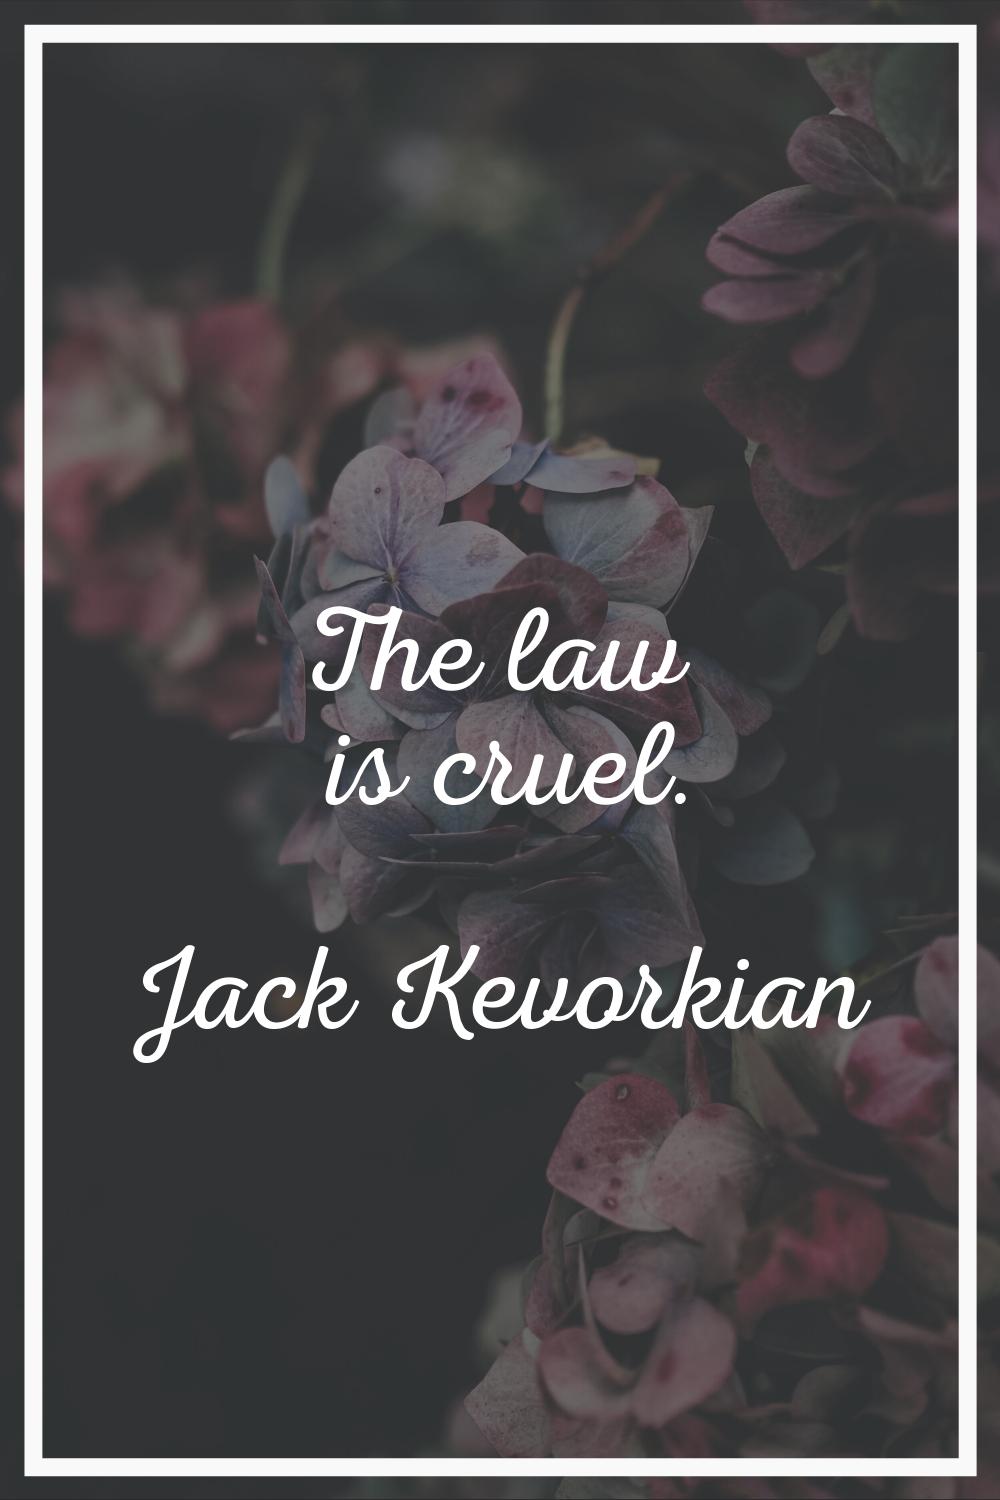 The law is cruel.